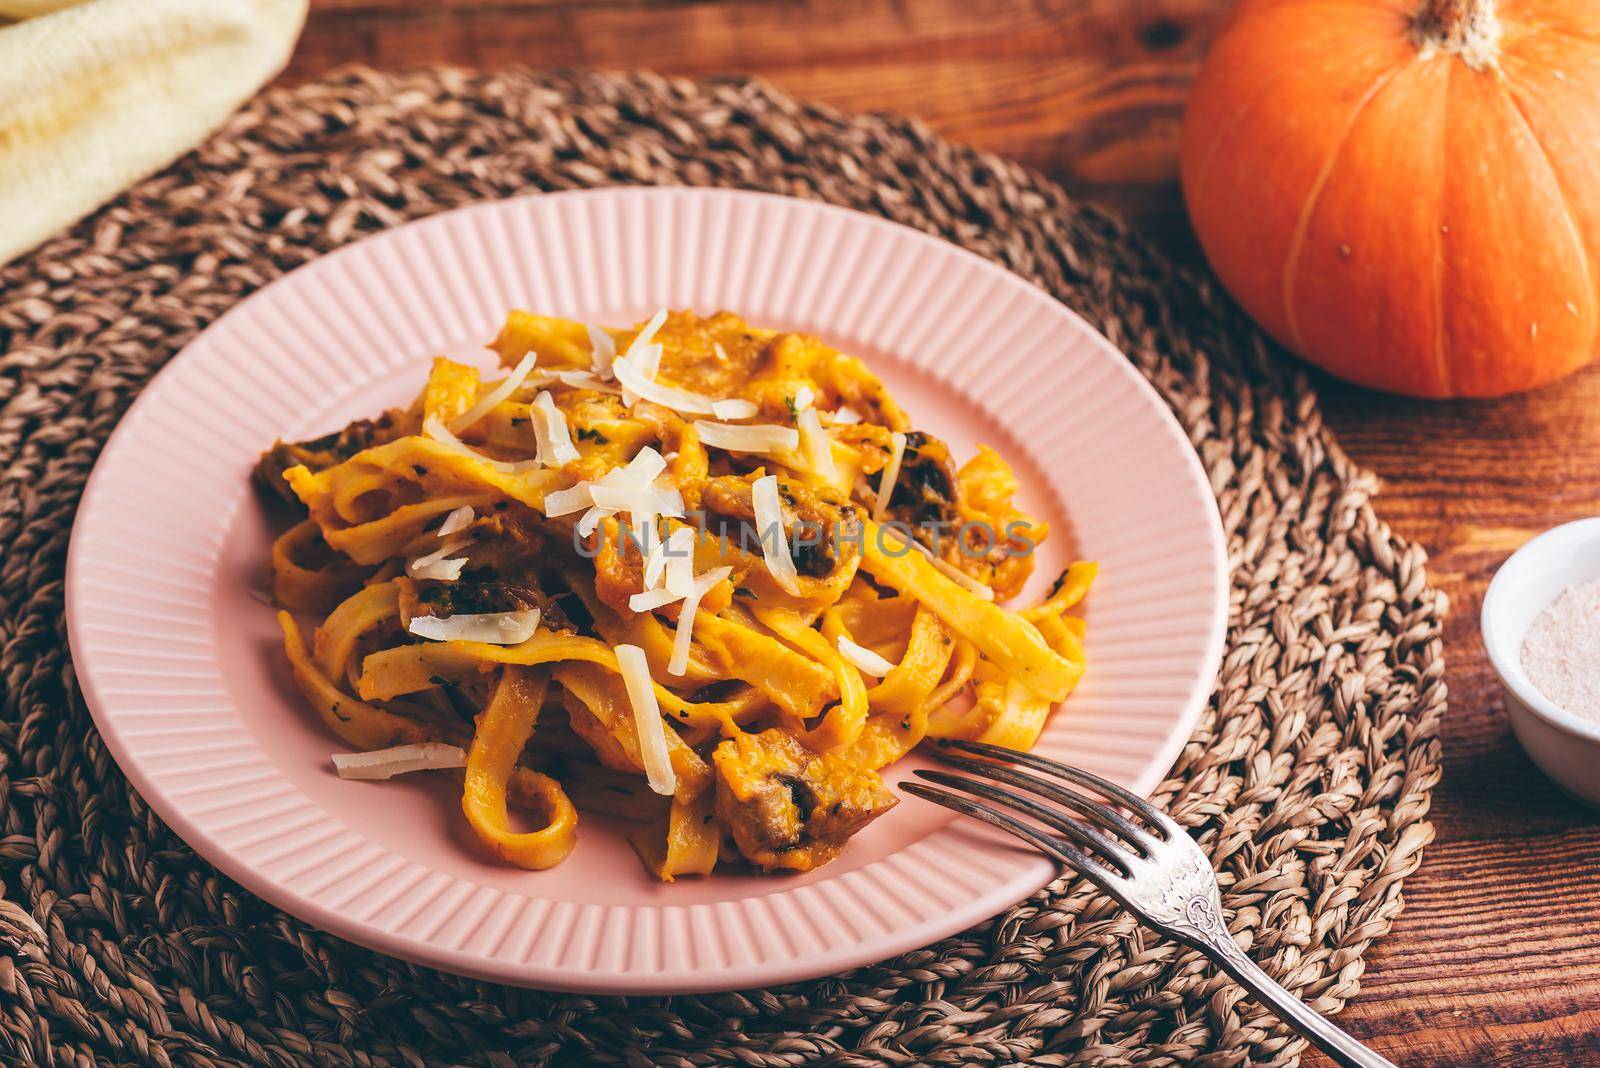 Fettuccine Pasta with Pumpkin Sauce and Mushrooms by Seva_blsv